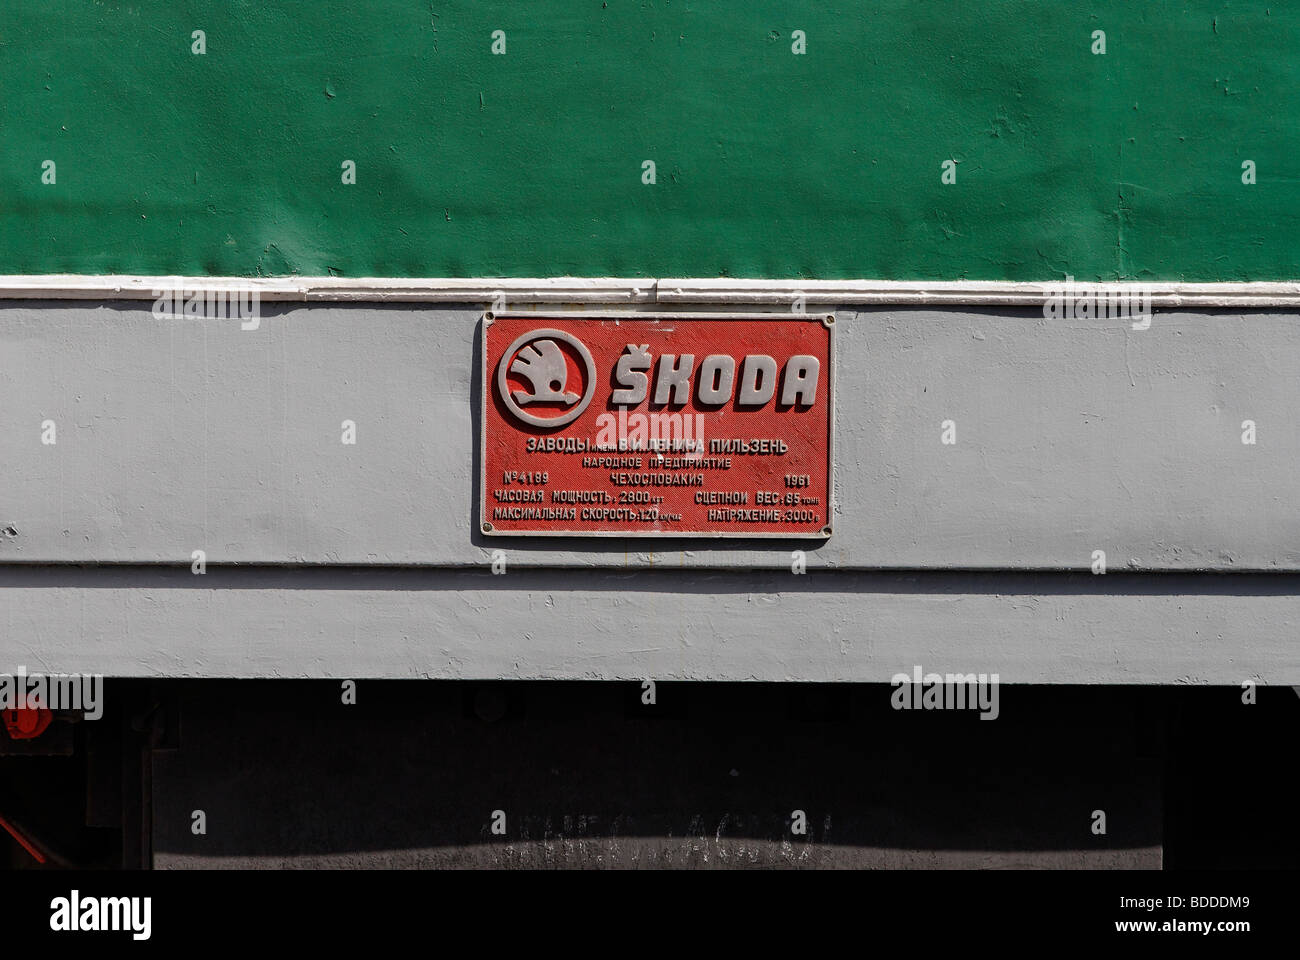 Skoda label on board of the Soviet diesel locomotive Stock Photo